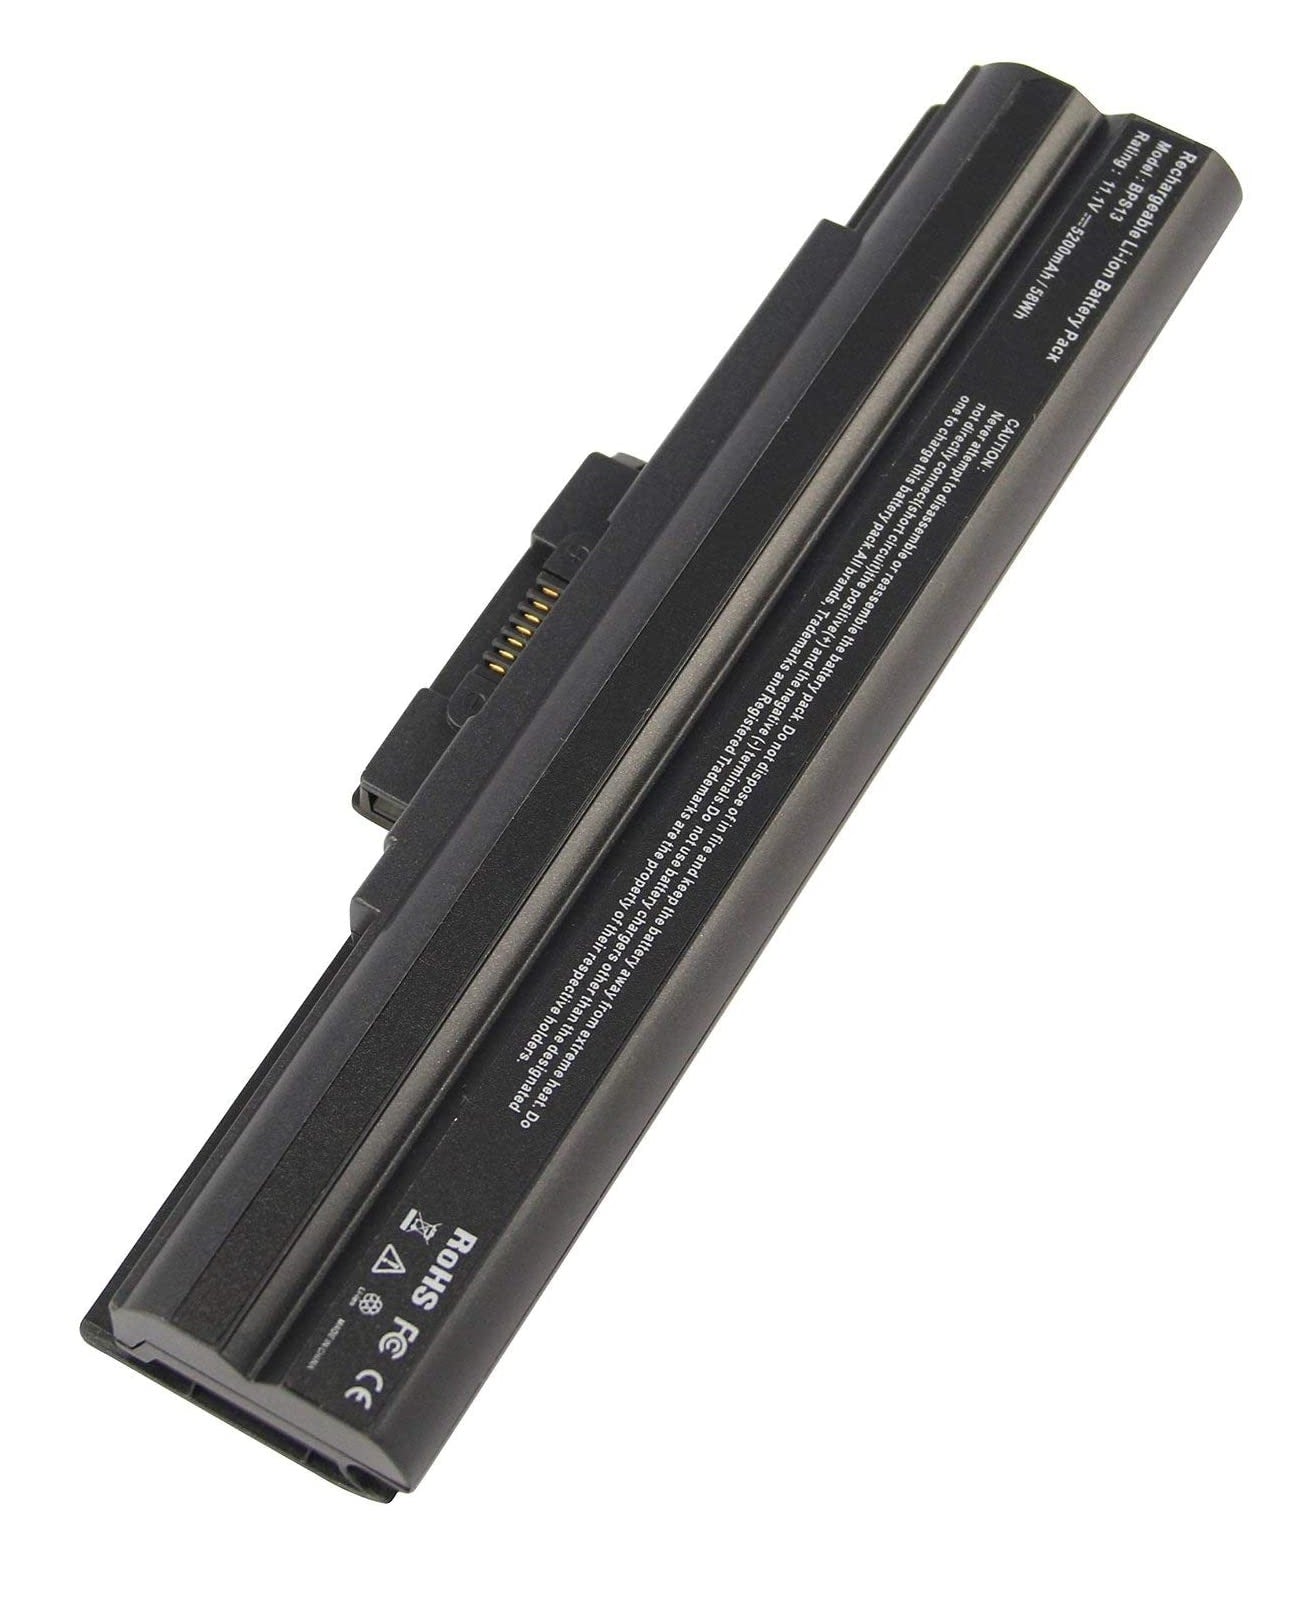 VGP-BPS13 Sony VAIO VGN-AW350J/B, VGP-BPS13/B, VGP-BSP13/S, VGP-BPS13A/S VGP-BPL13 Replacement Laptop Battery